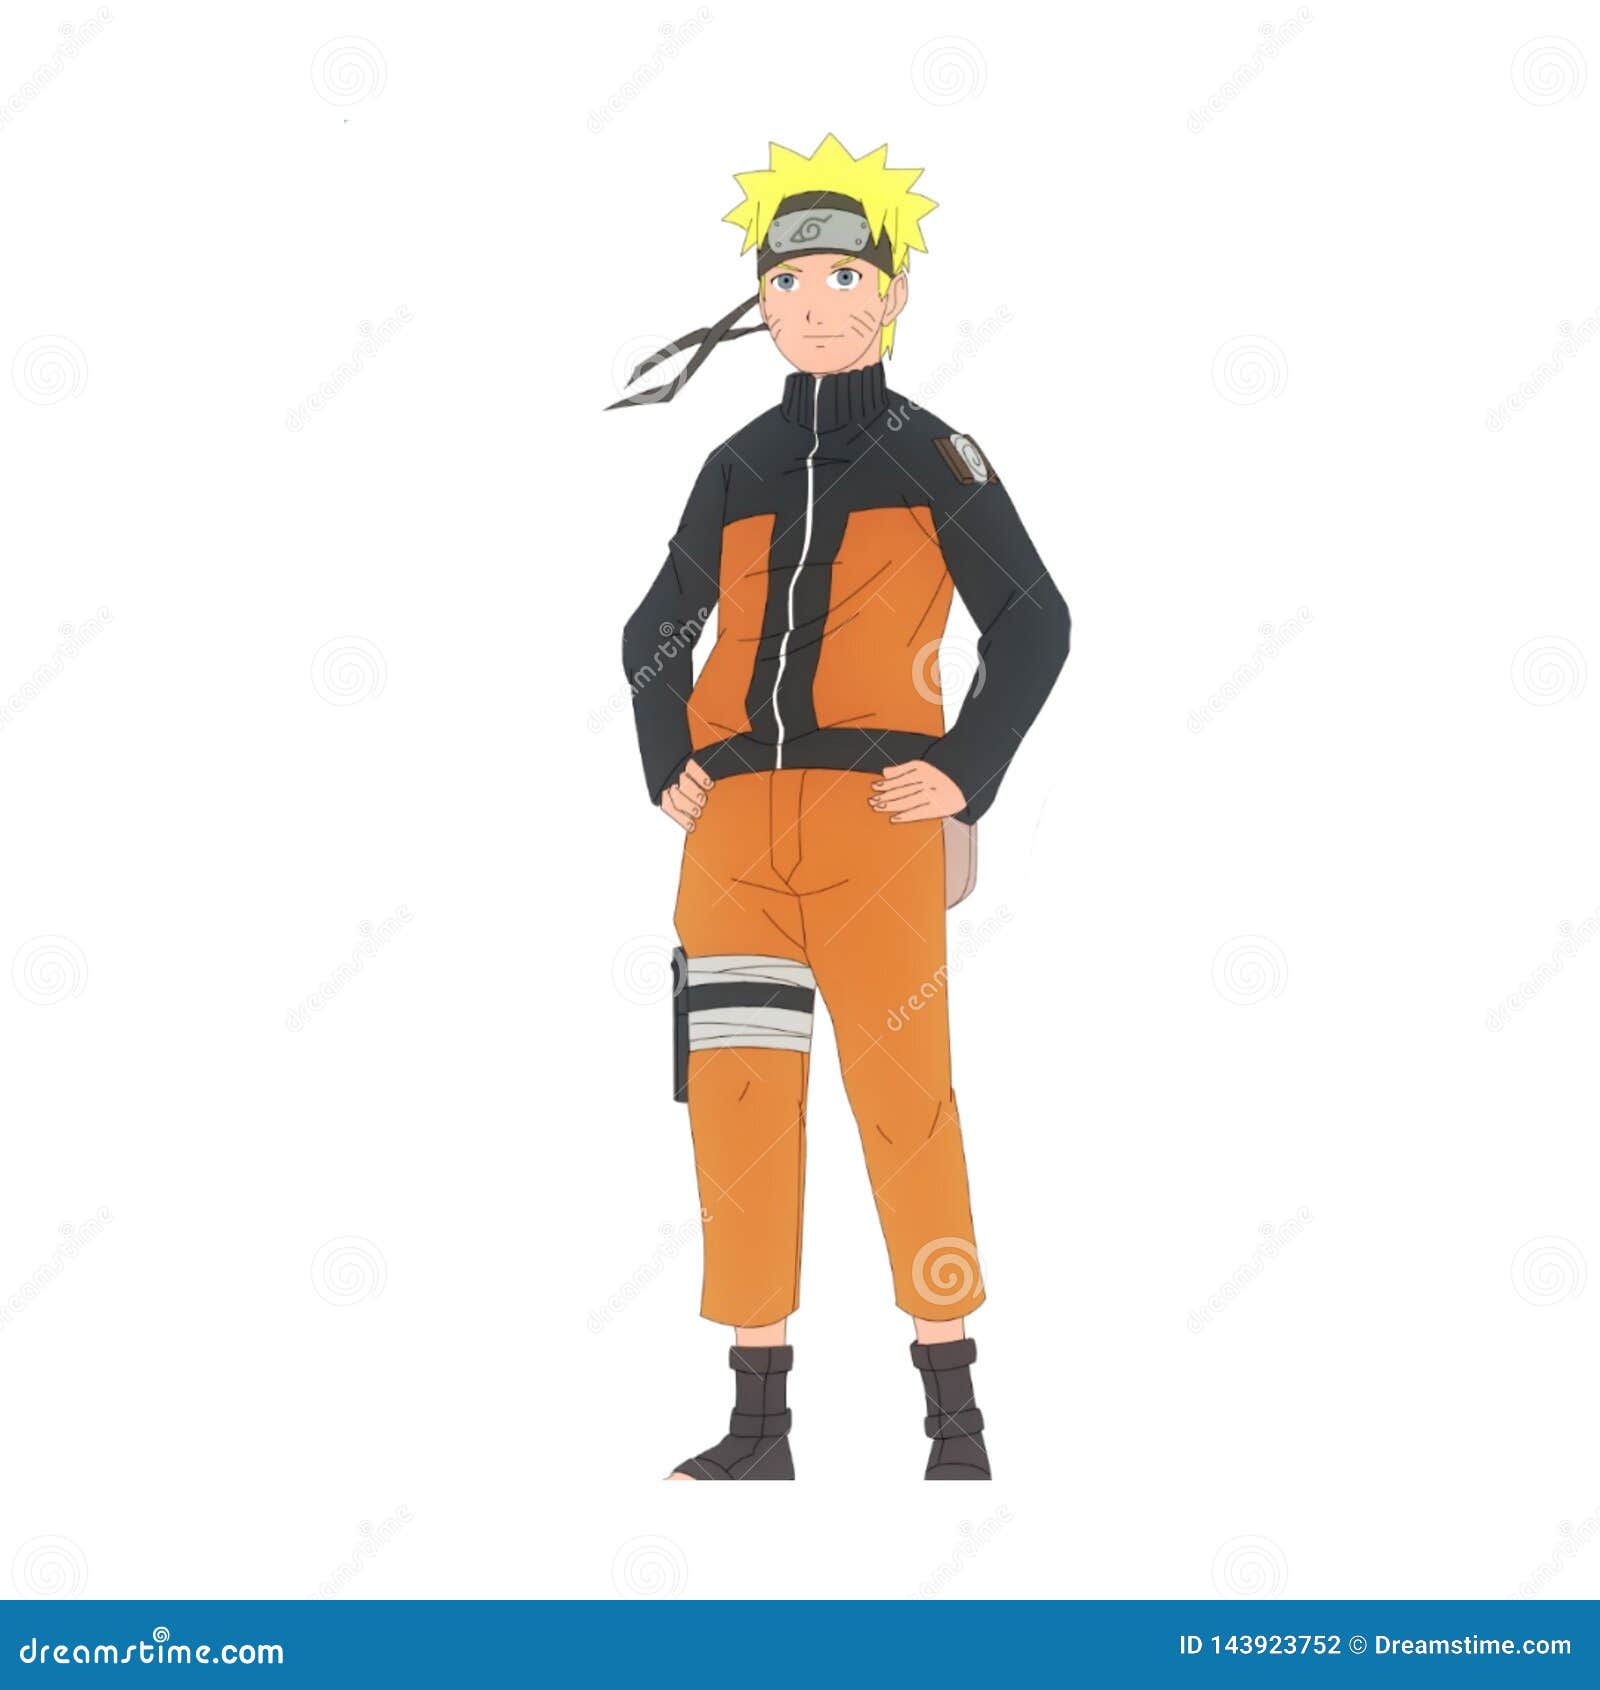 Naruto Sage Mode Full Body Clipart